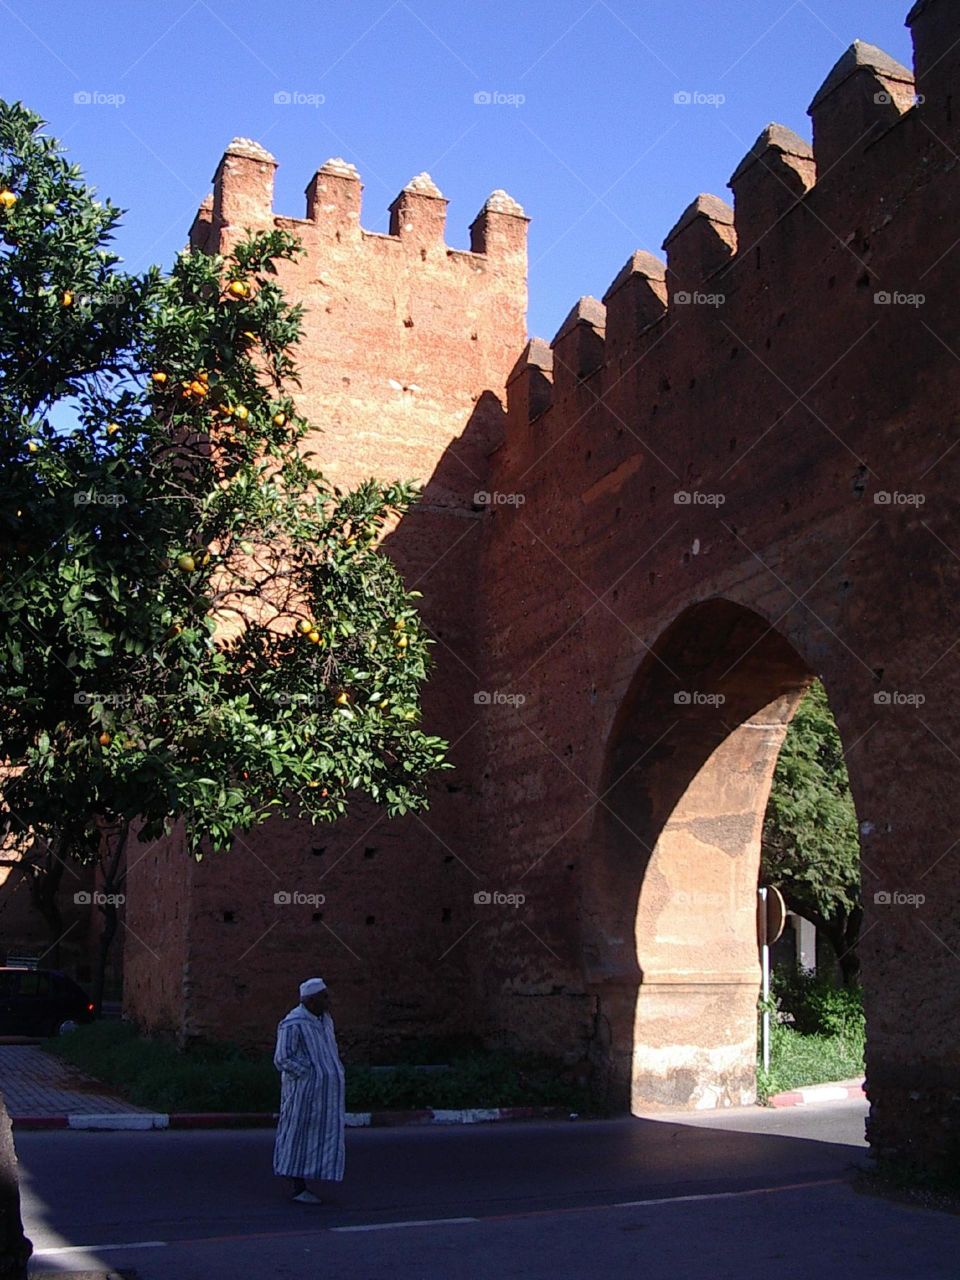 Morocco's capital wall